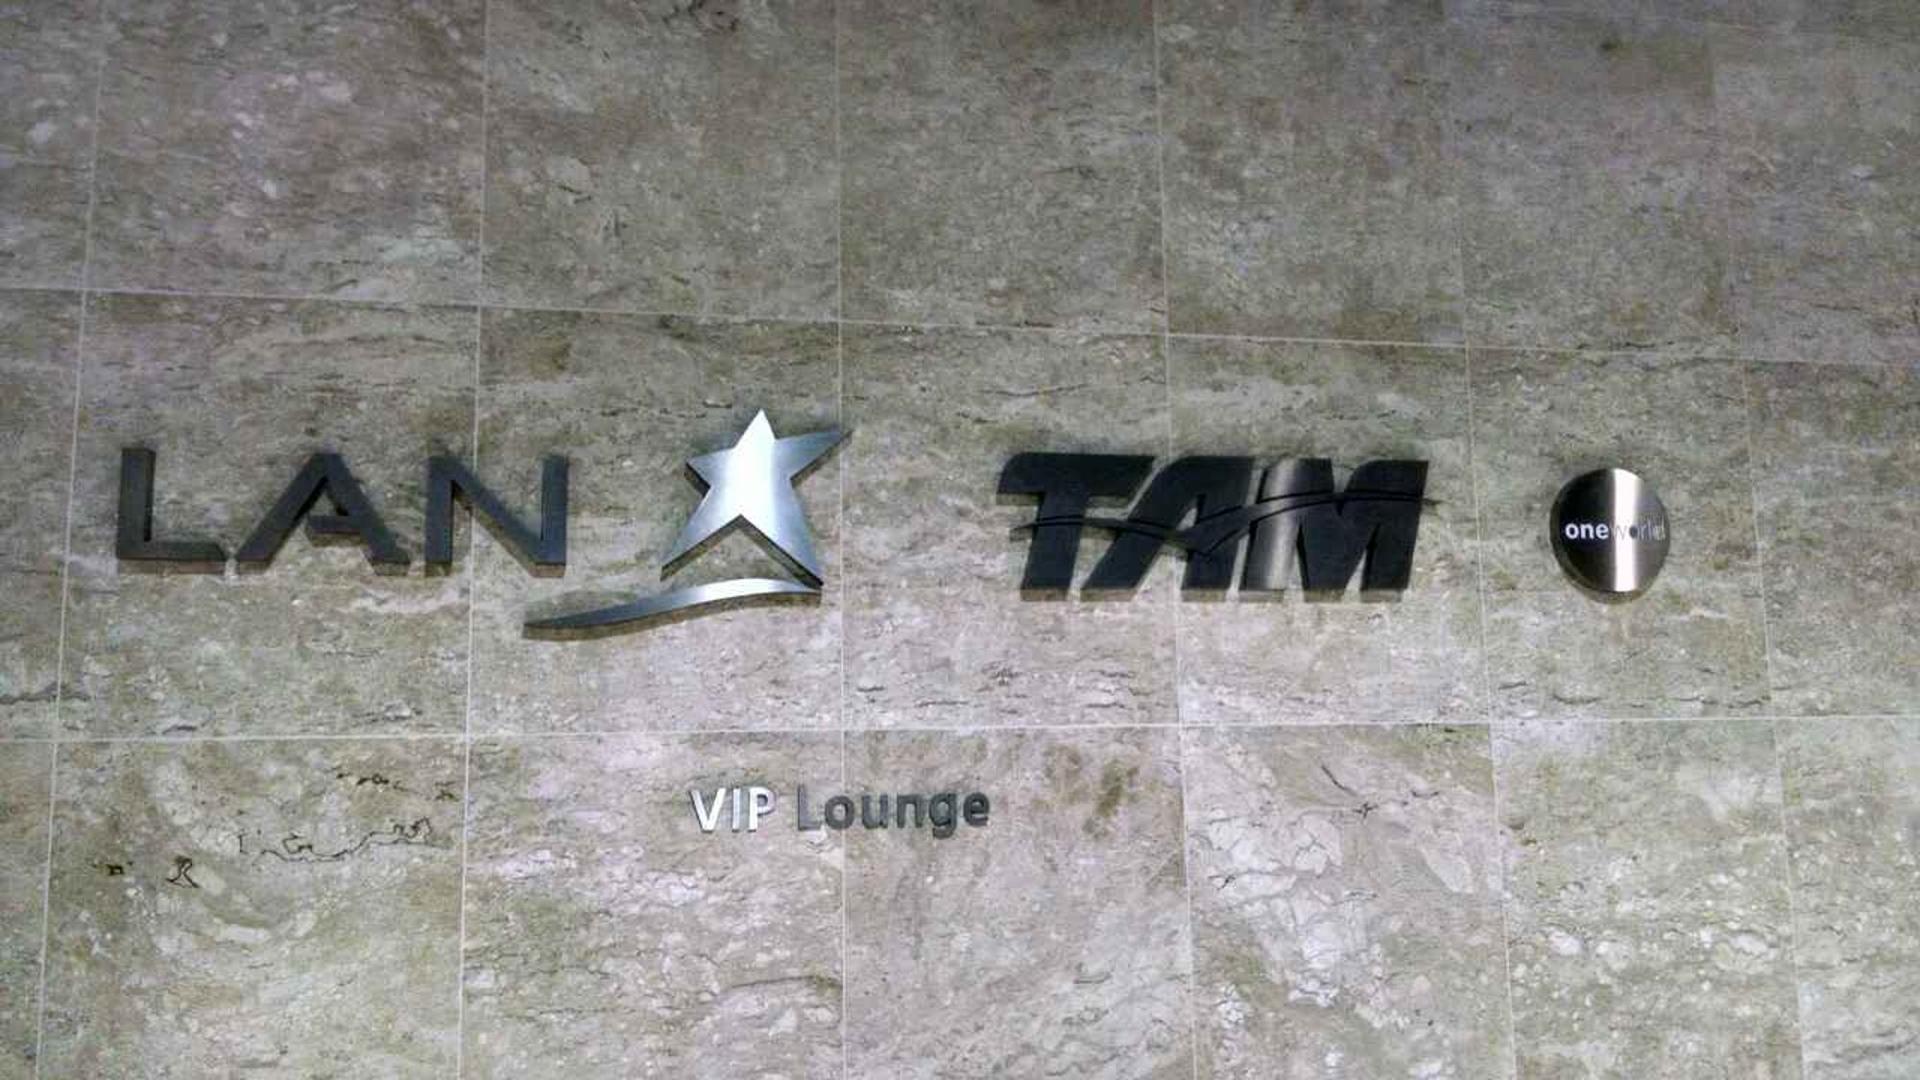 LATAM VIP Lounge image 45 of 47